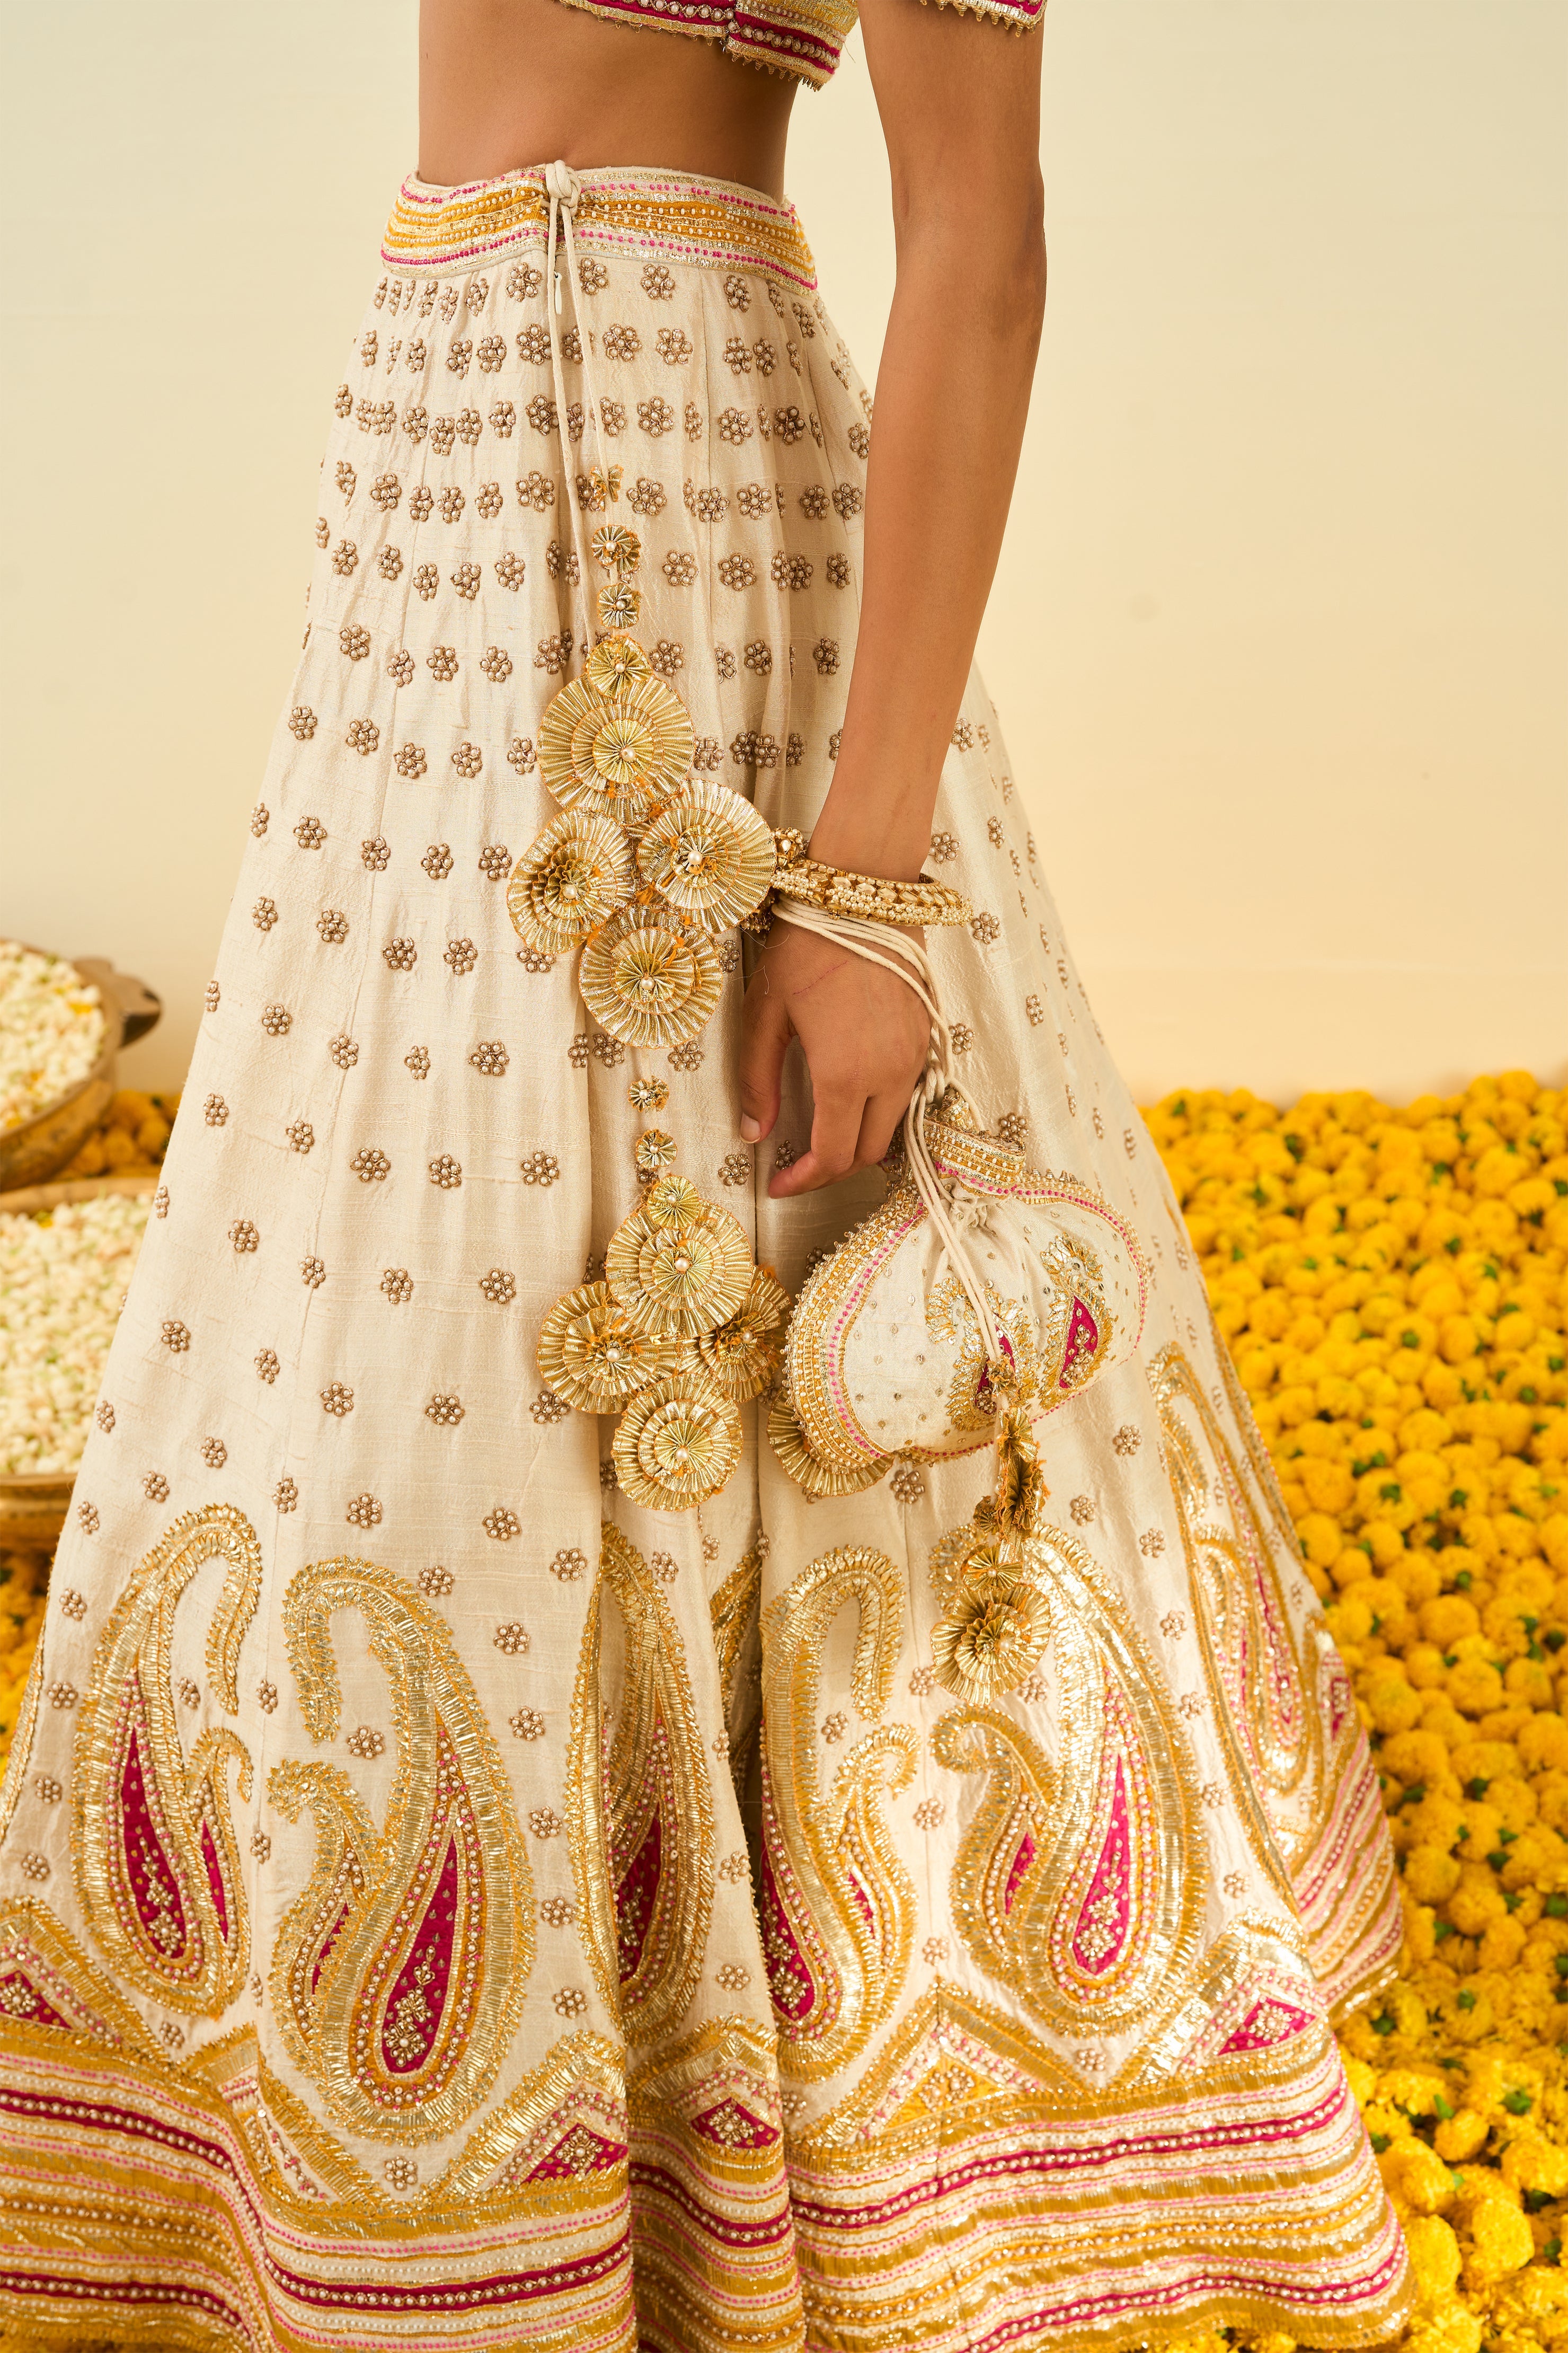 Sheetal Batra - Shahnaz - Daisy Ivory Embroidered Lehenga Set